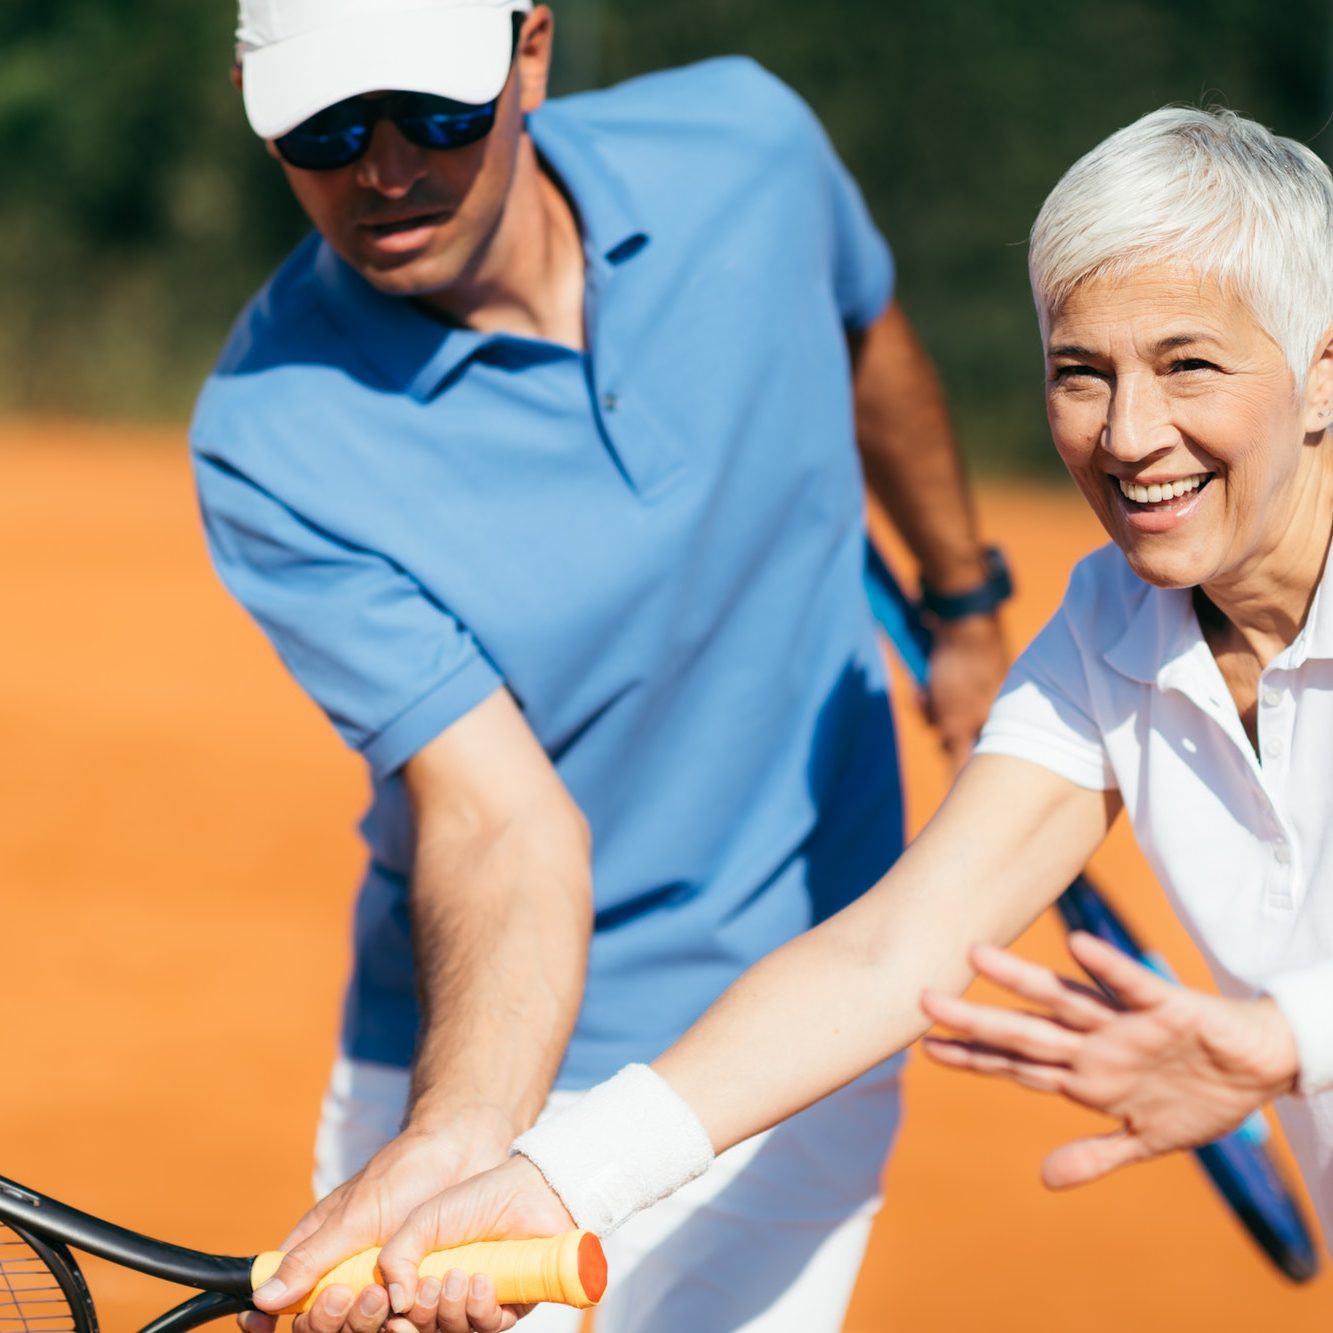 Active Senior Woman Practicing Tennis